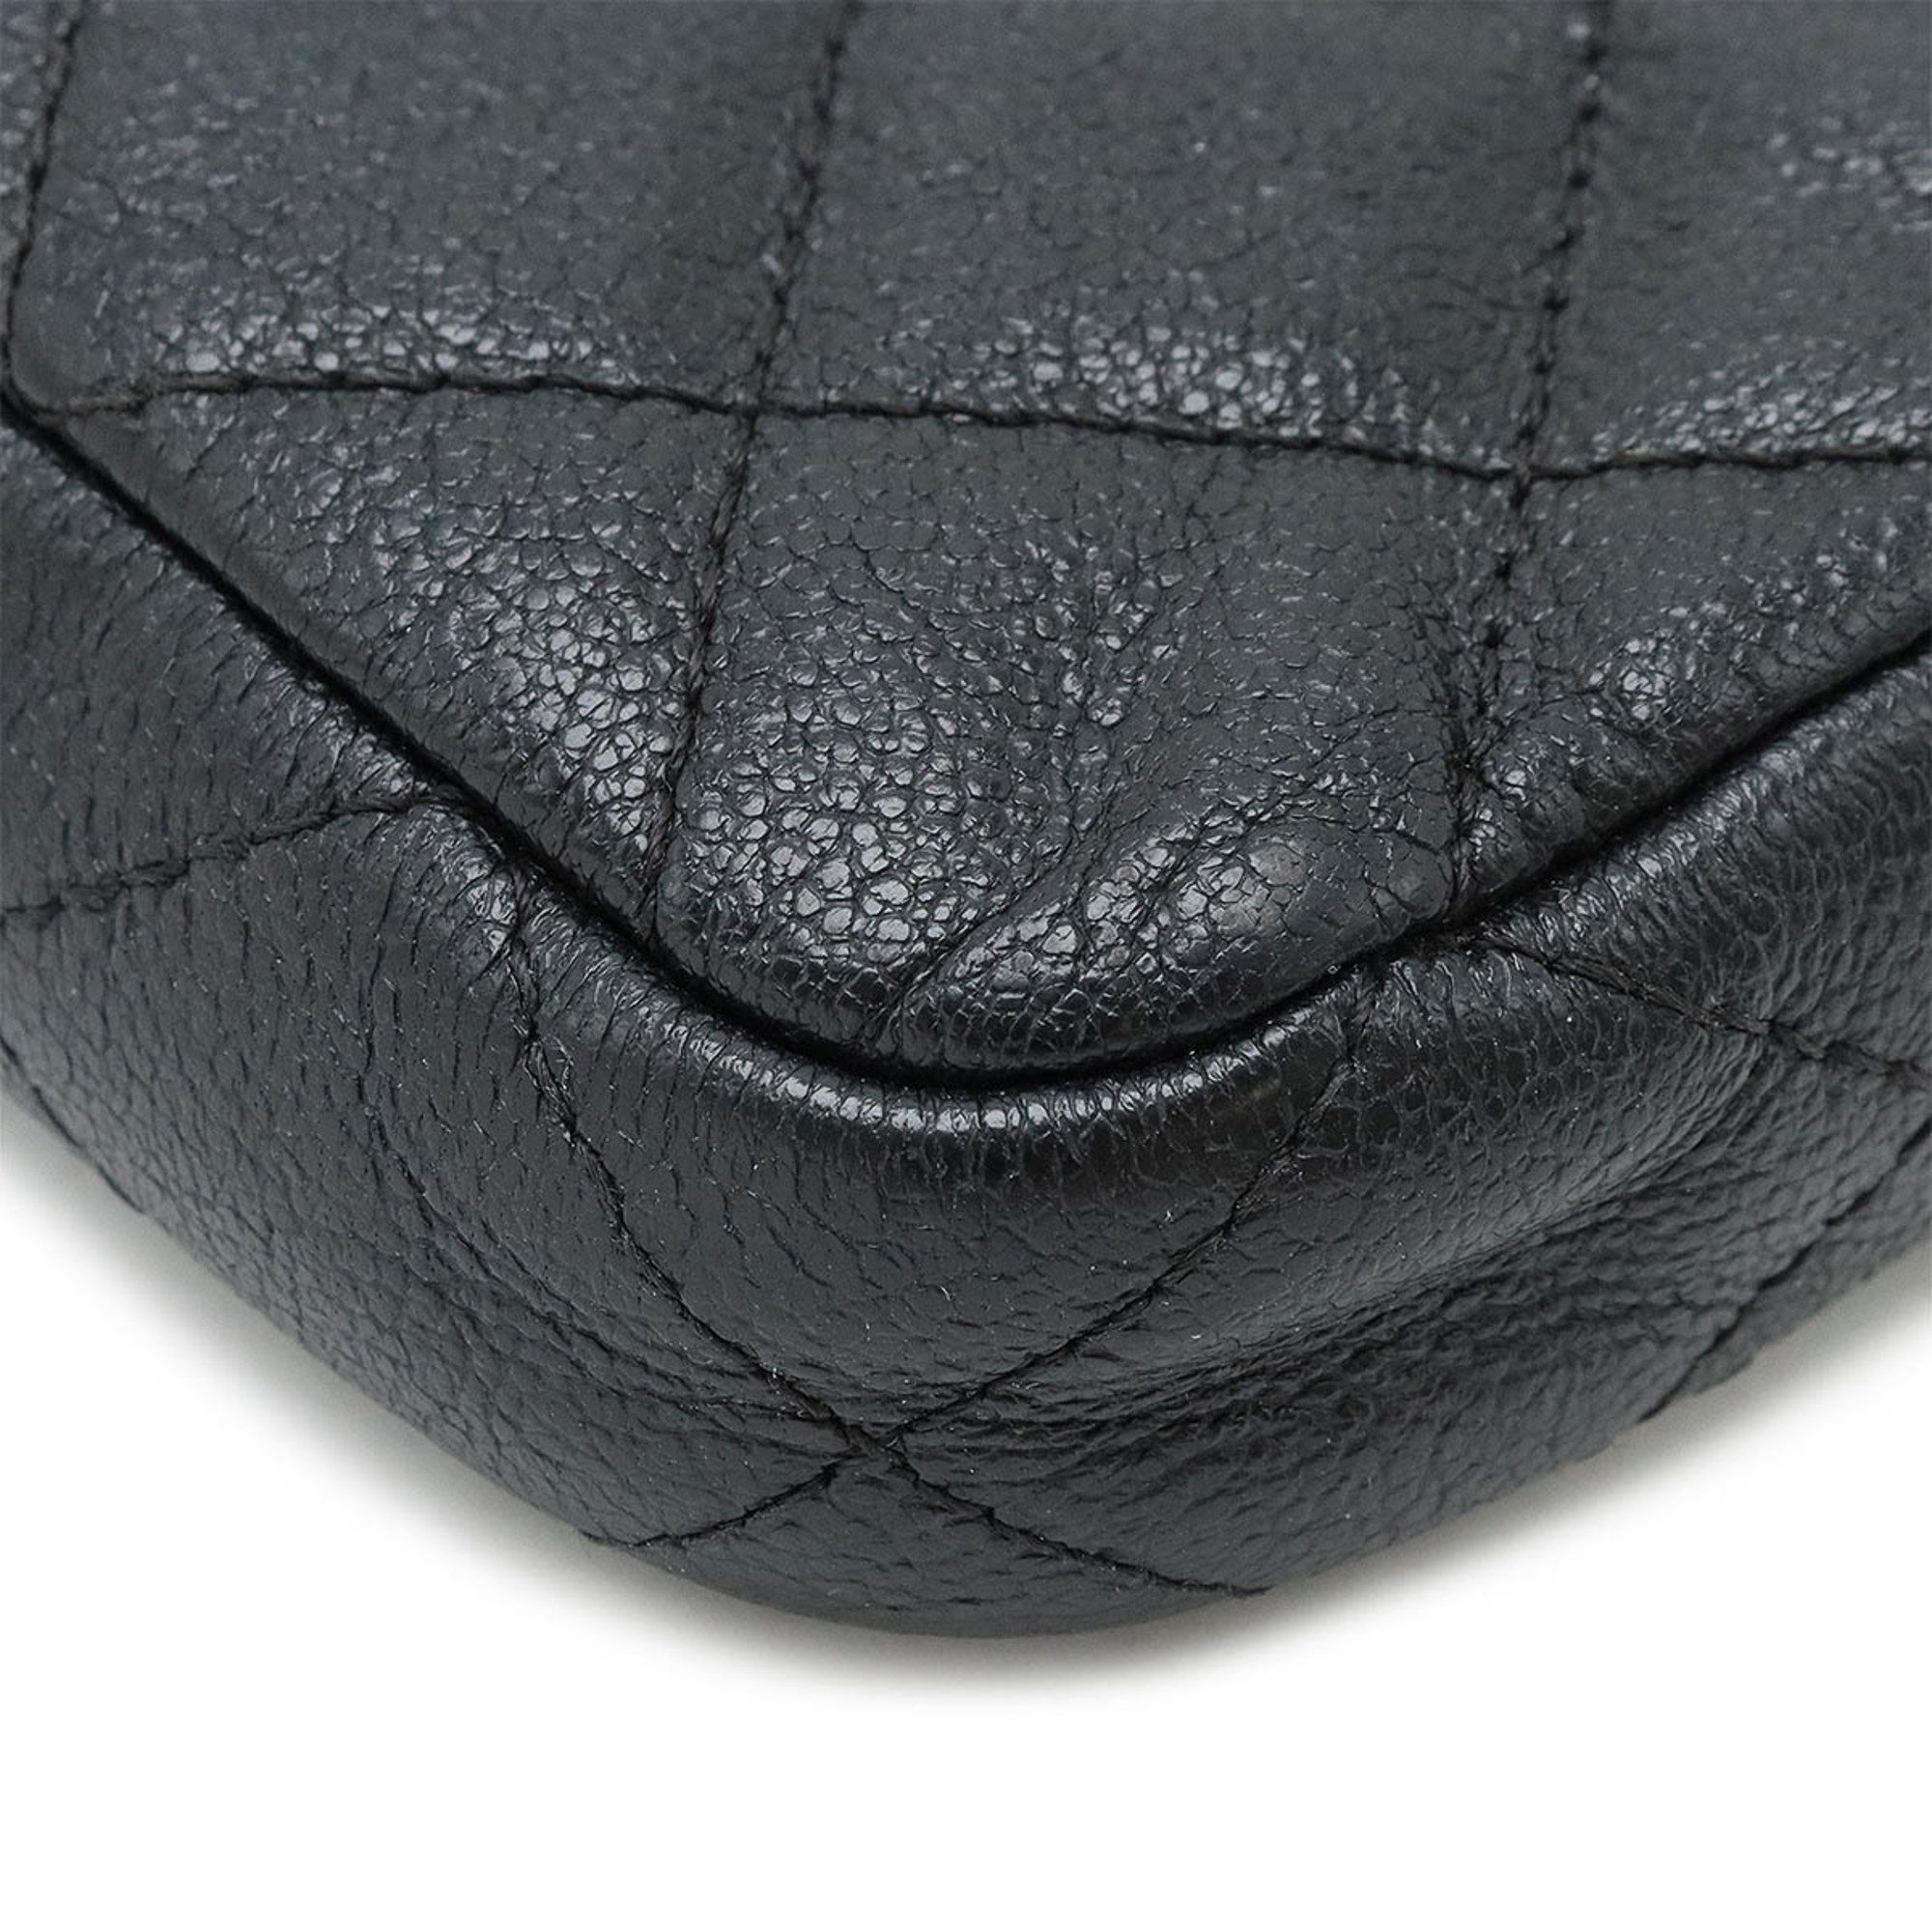 Chanel A82527 Women's Caviar Leather Clutch Bag Black